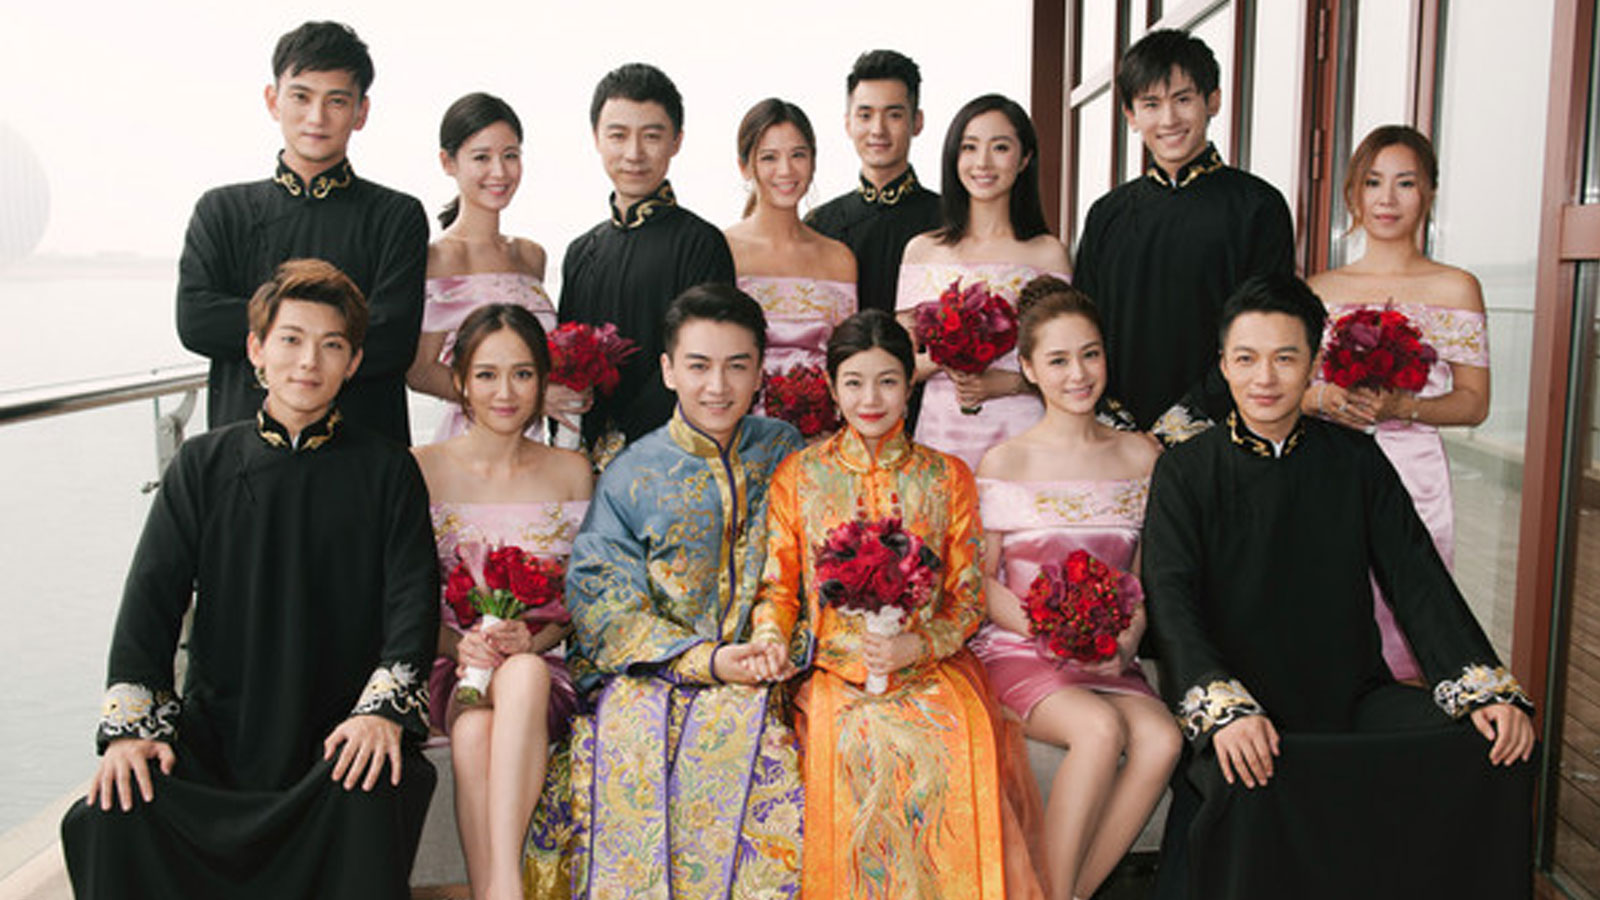 Michelle Chen, Chen Xiao’s wedding photos revealed - 8days